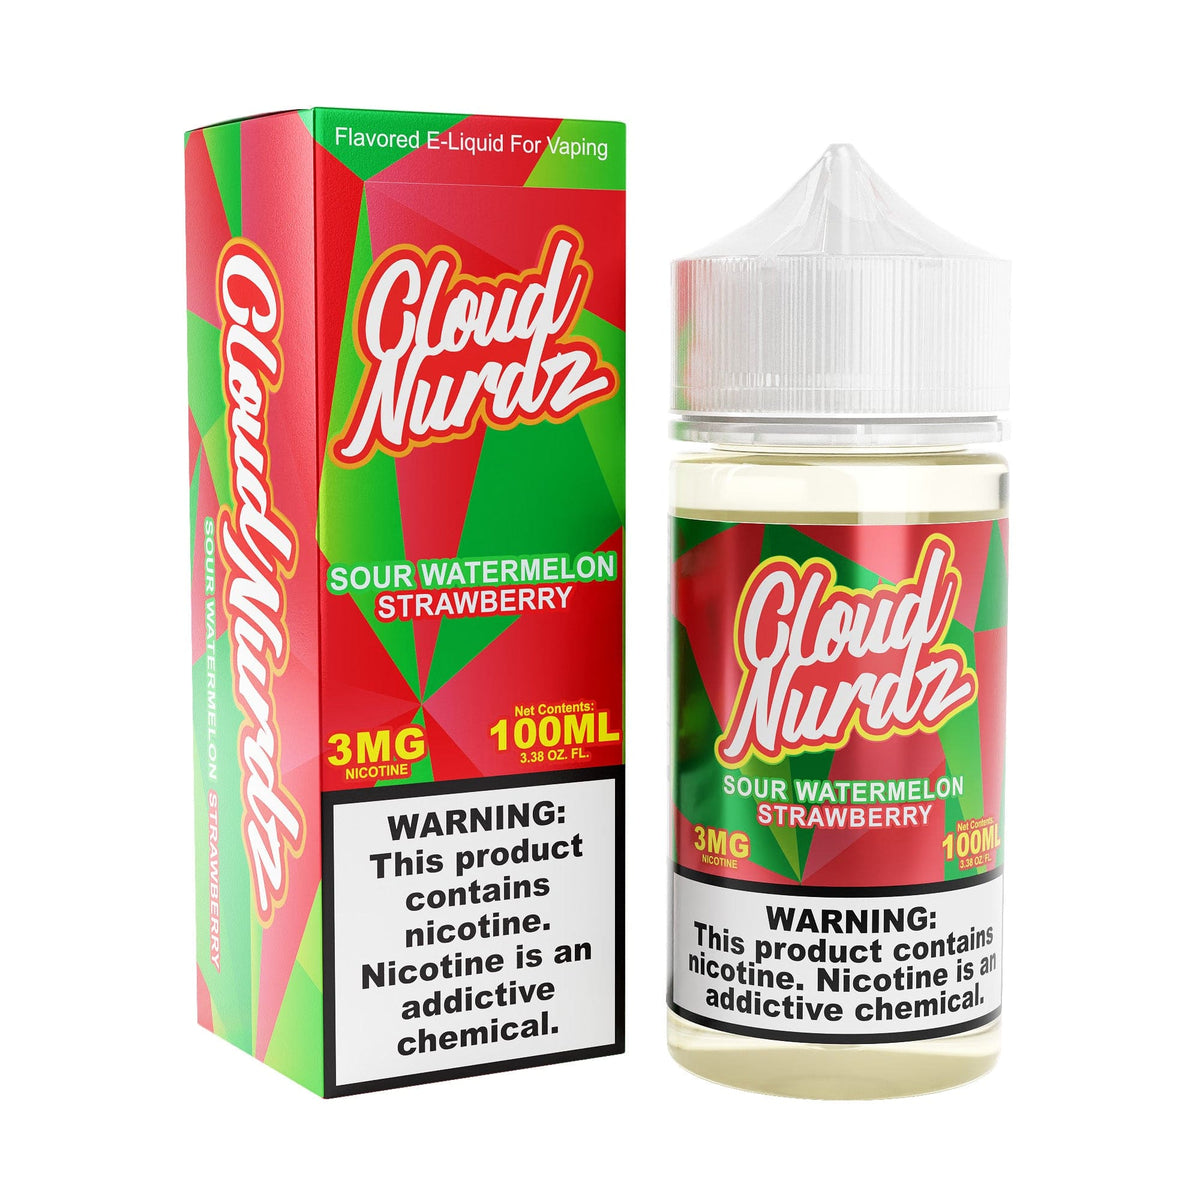 Cloud Nurdz Juice Sour Watermelon Strawberry 100ml Vape Juice - Cloud Nurdz